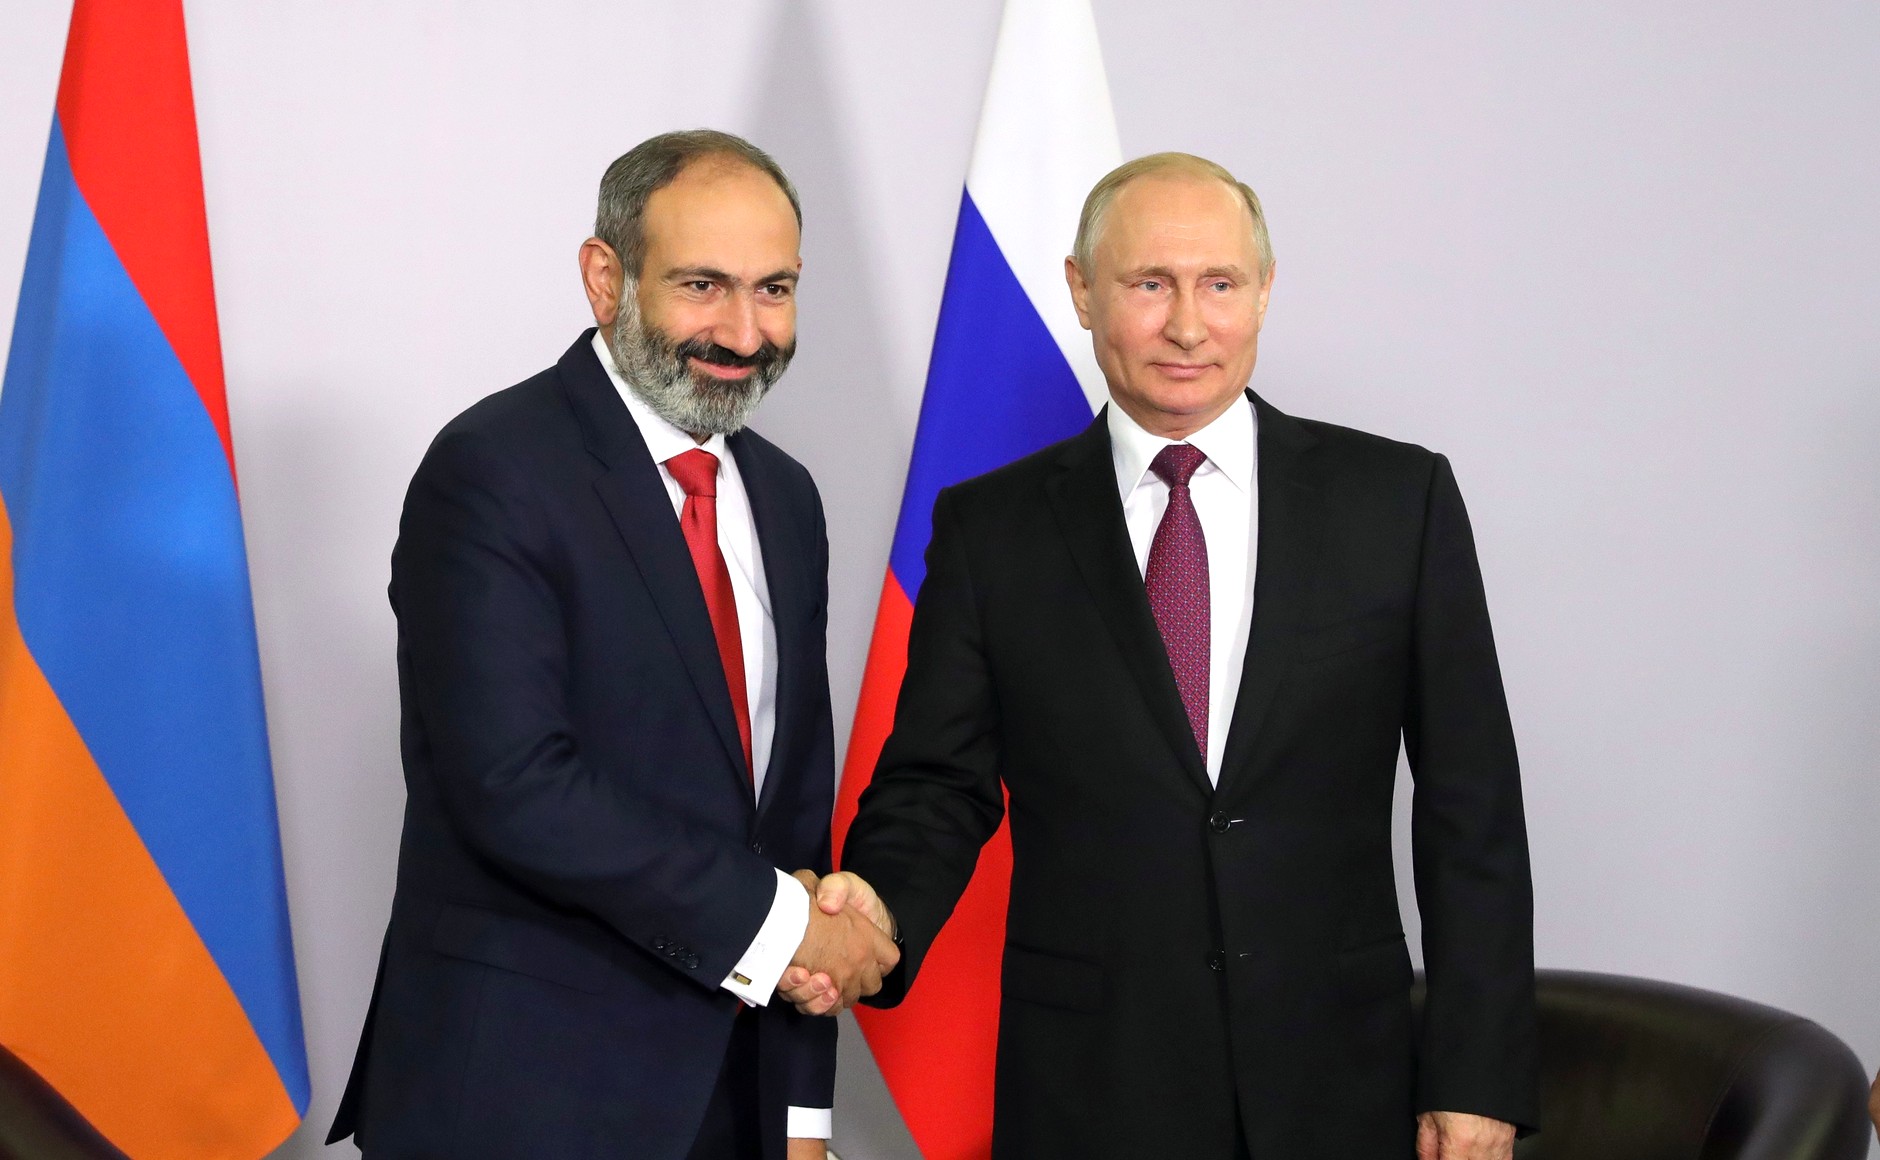 Pashinyan Putin 3 бархатная революция бархатная революция